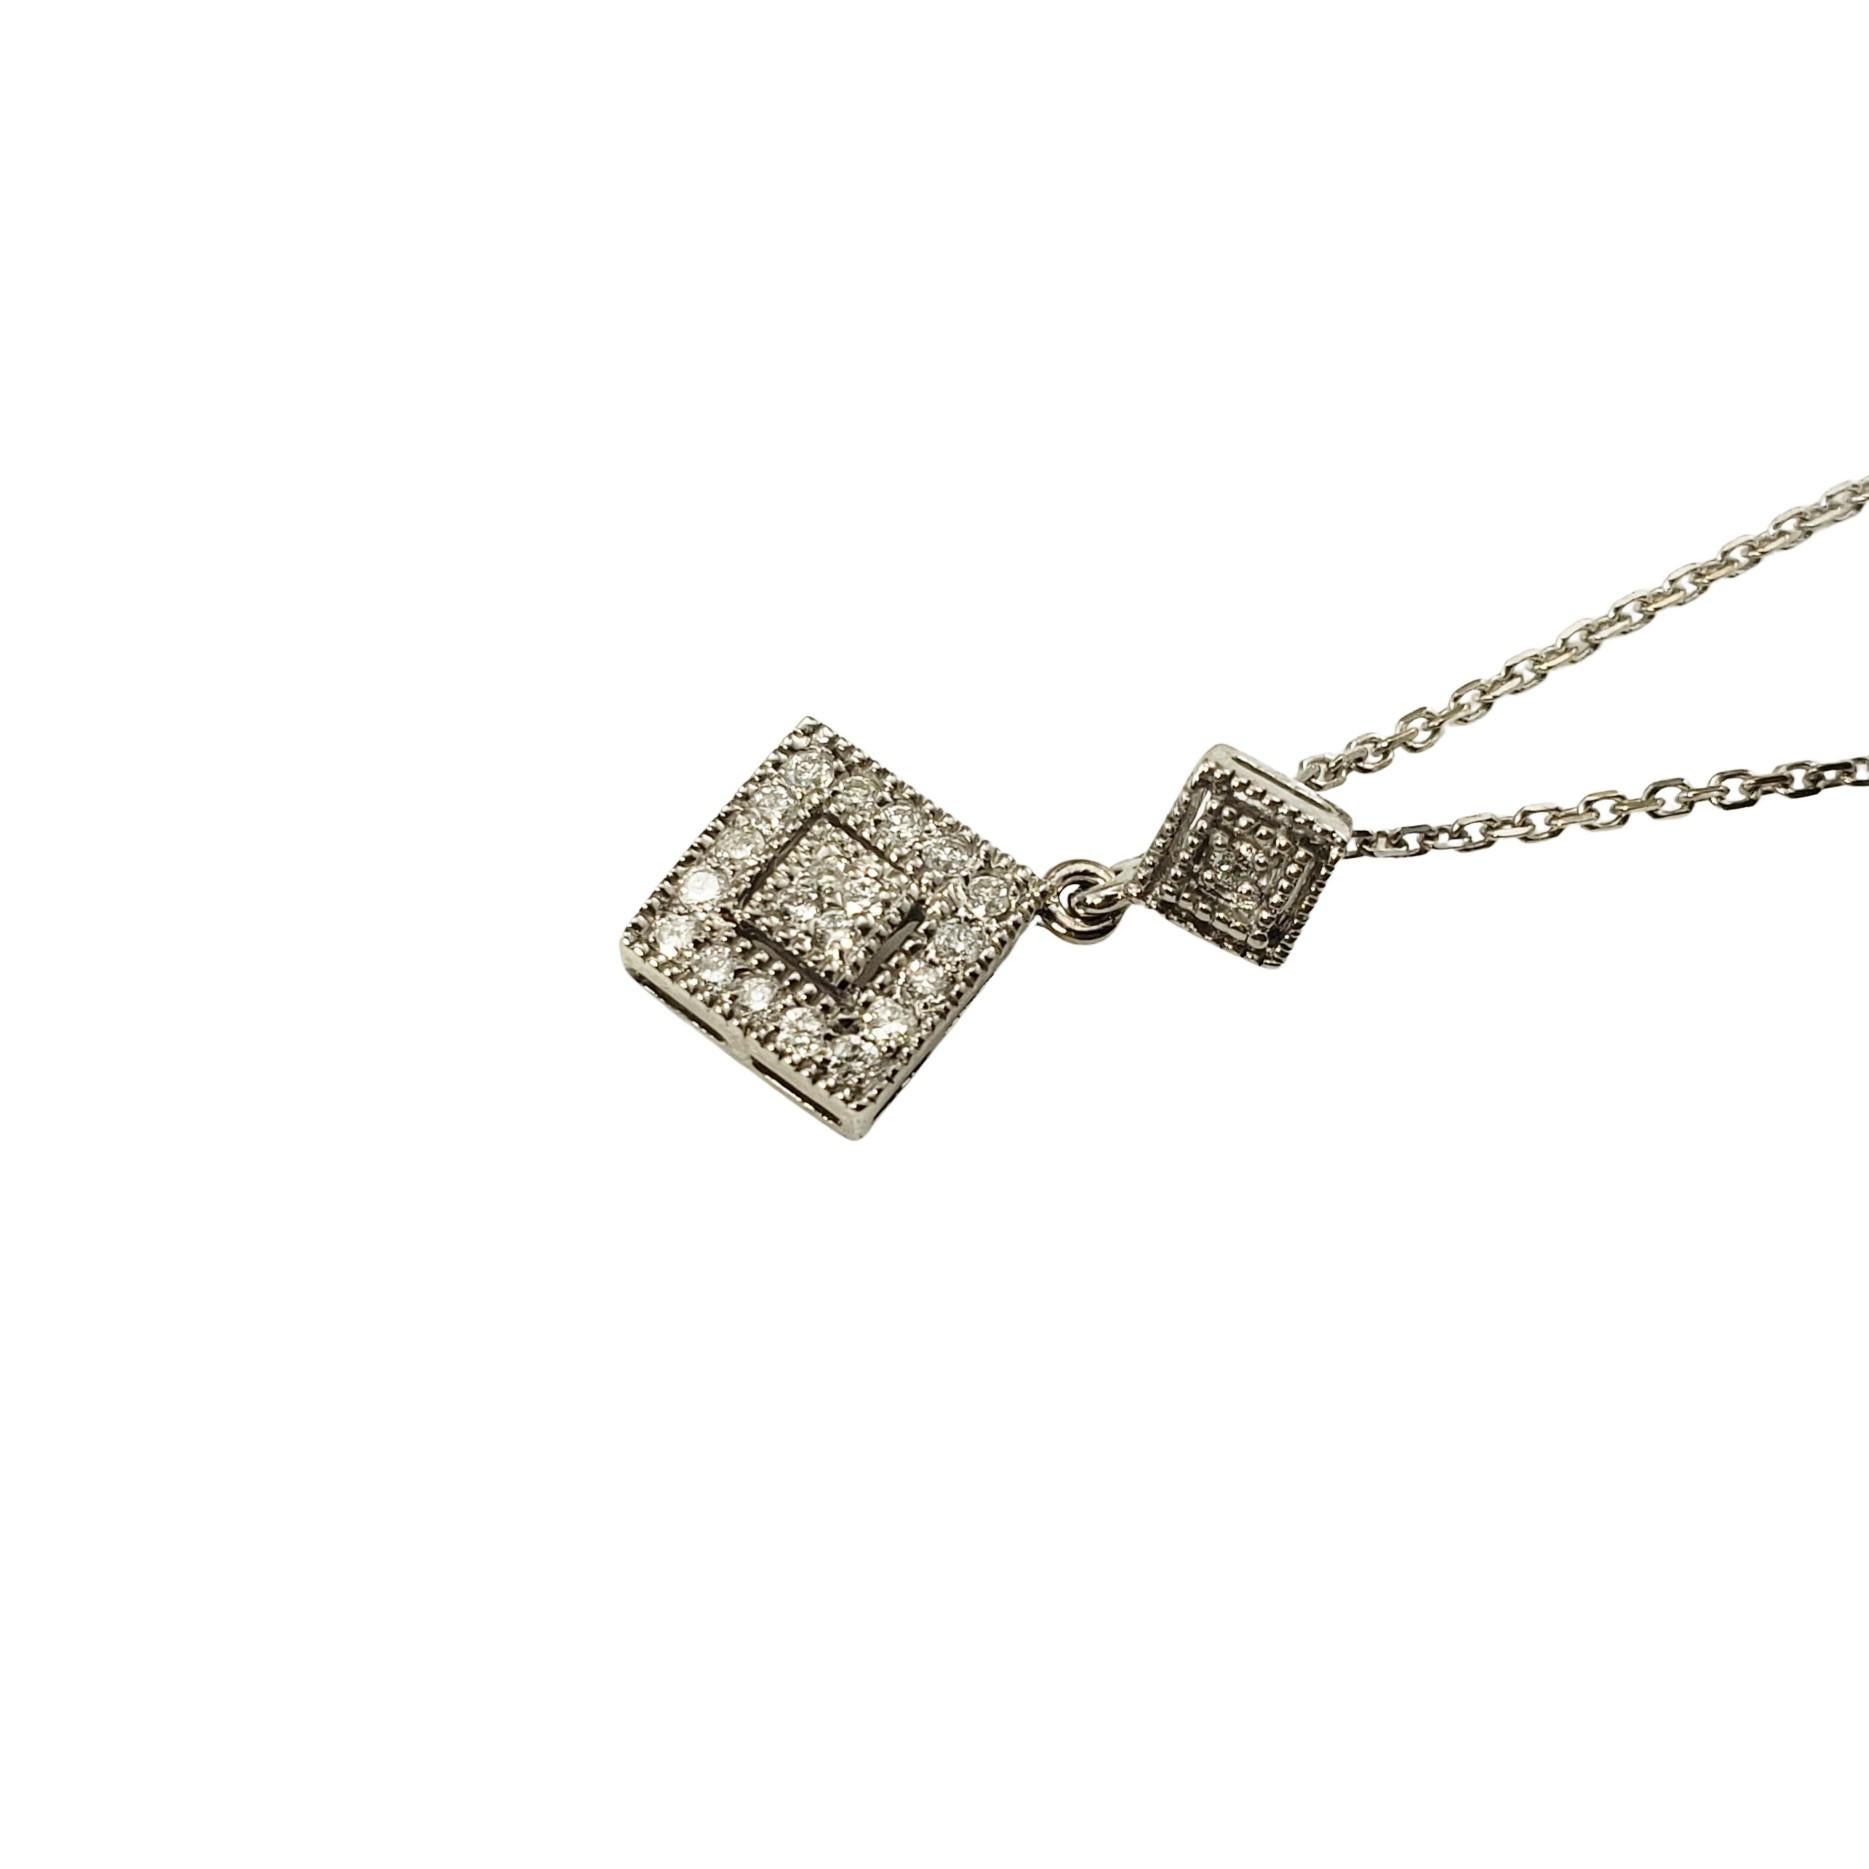 Brilliant Cut 10/14 Karat White Gold and Diamond Pendant Necklace For Sale